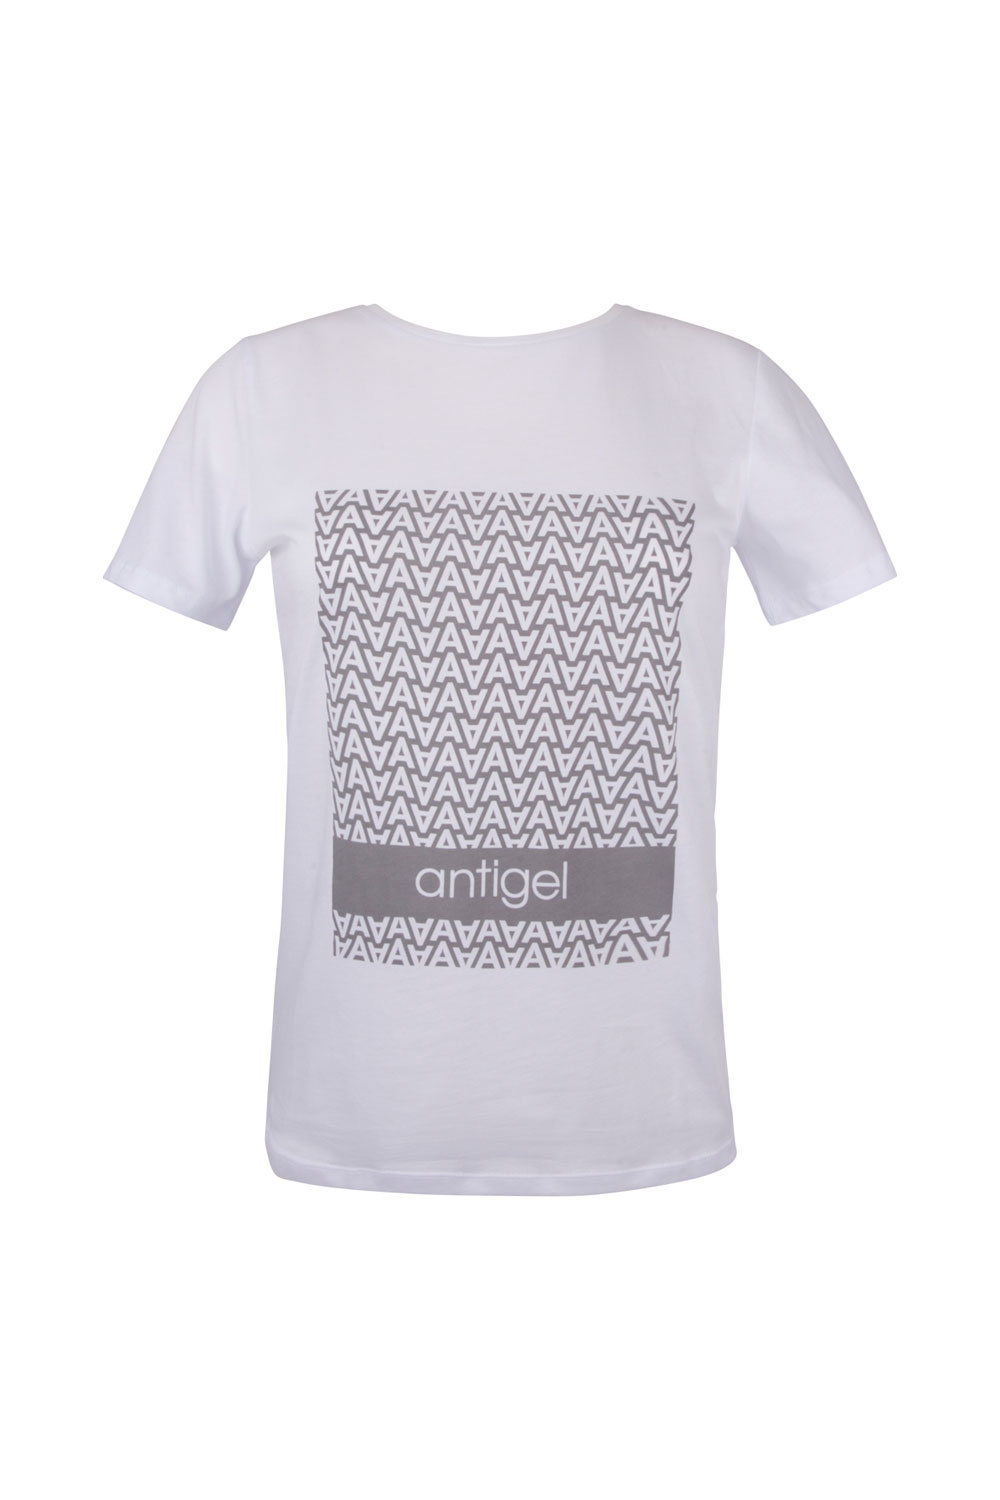 Antigel Shirt Tag Antigel 44 mehrfarbig günstig online kaufen